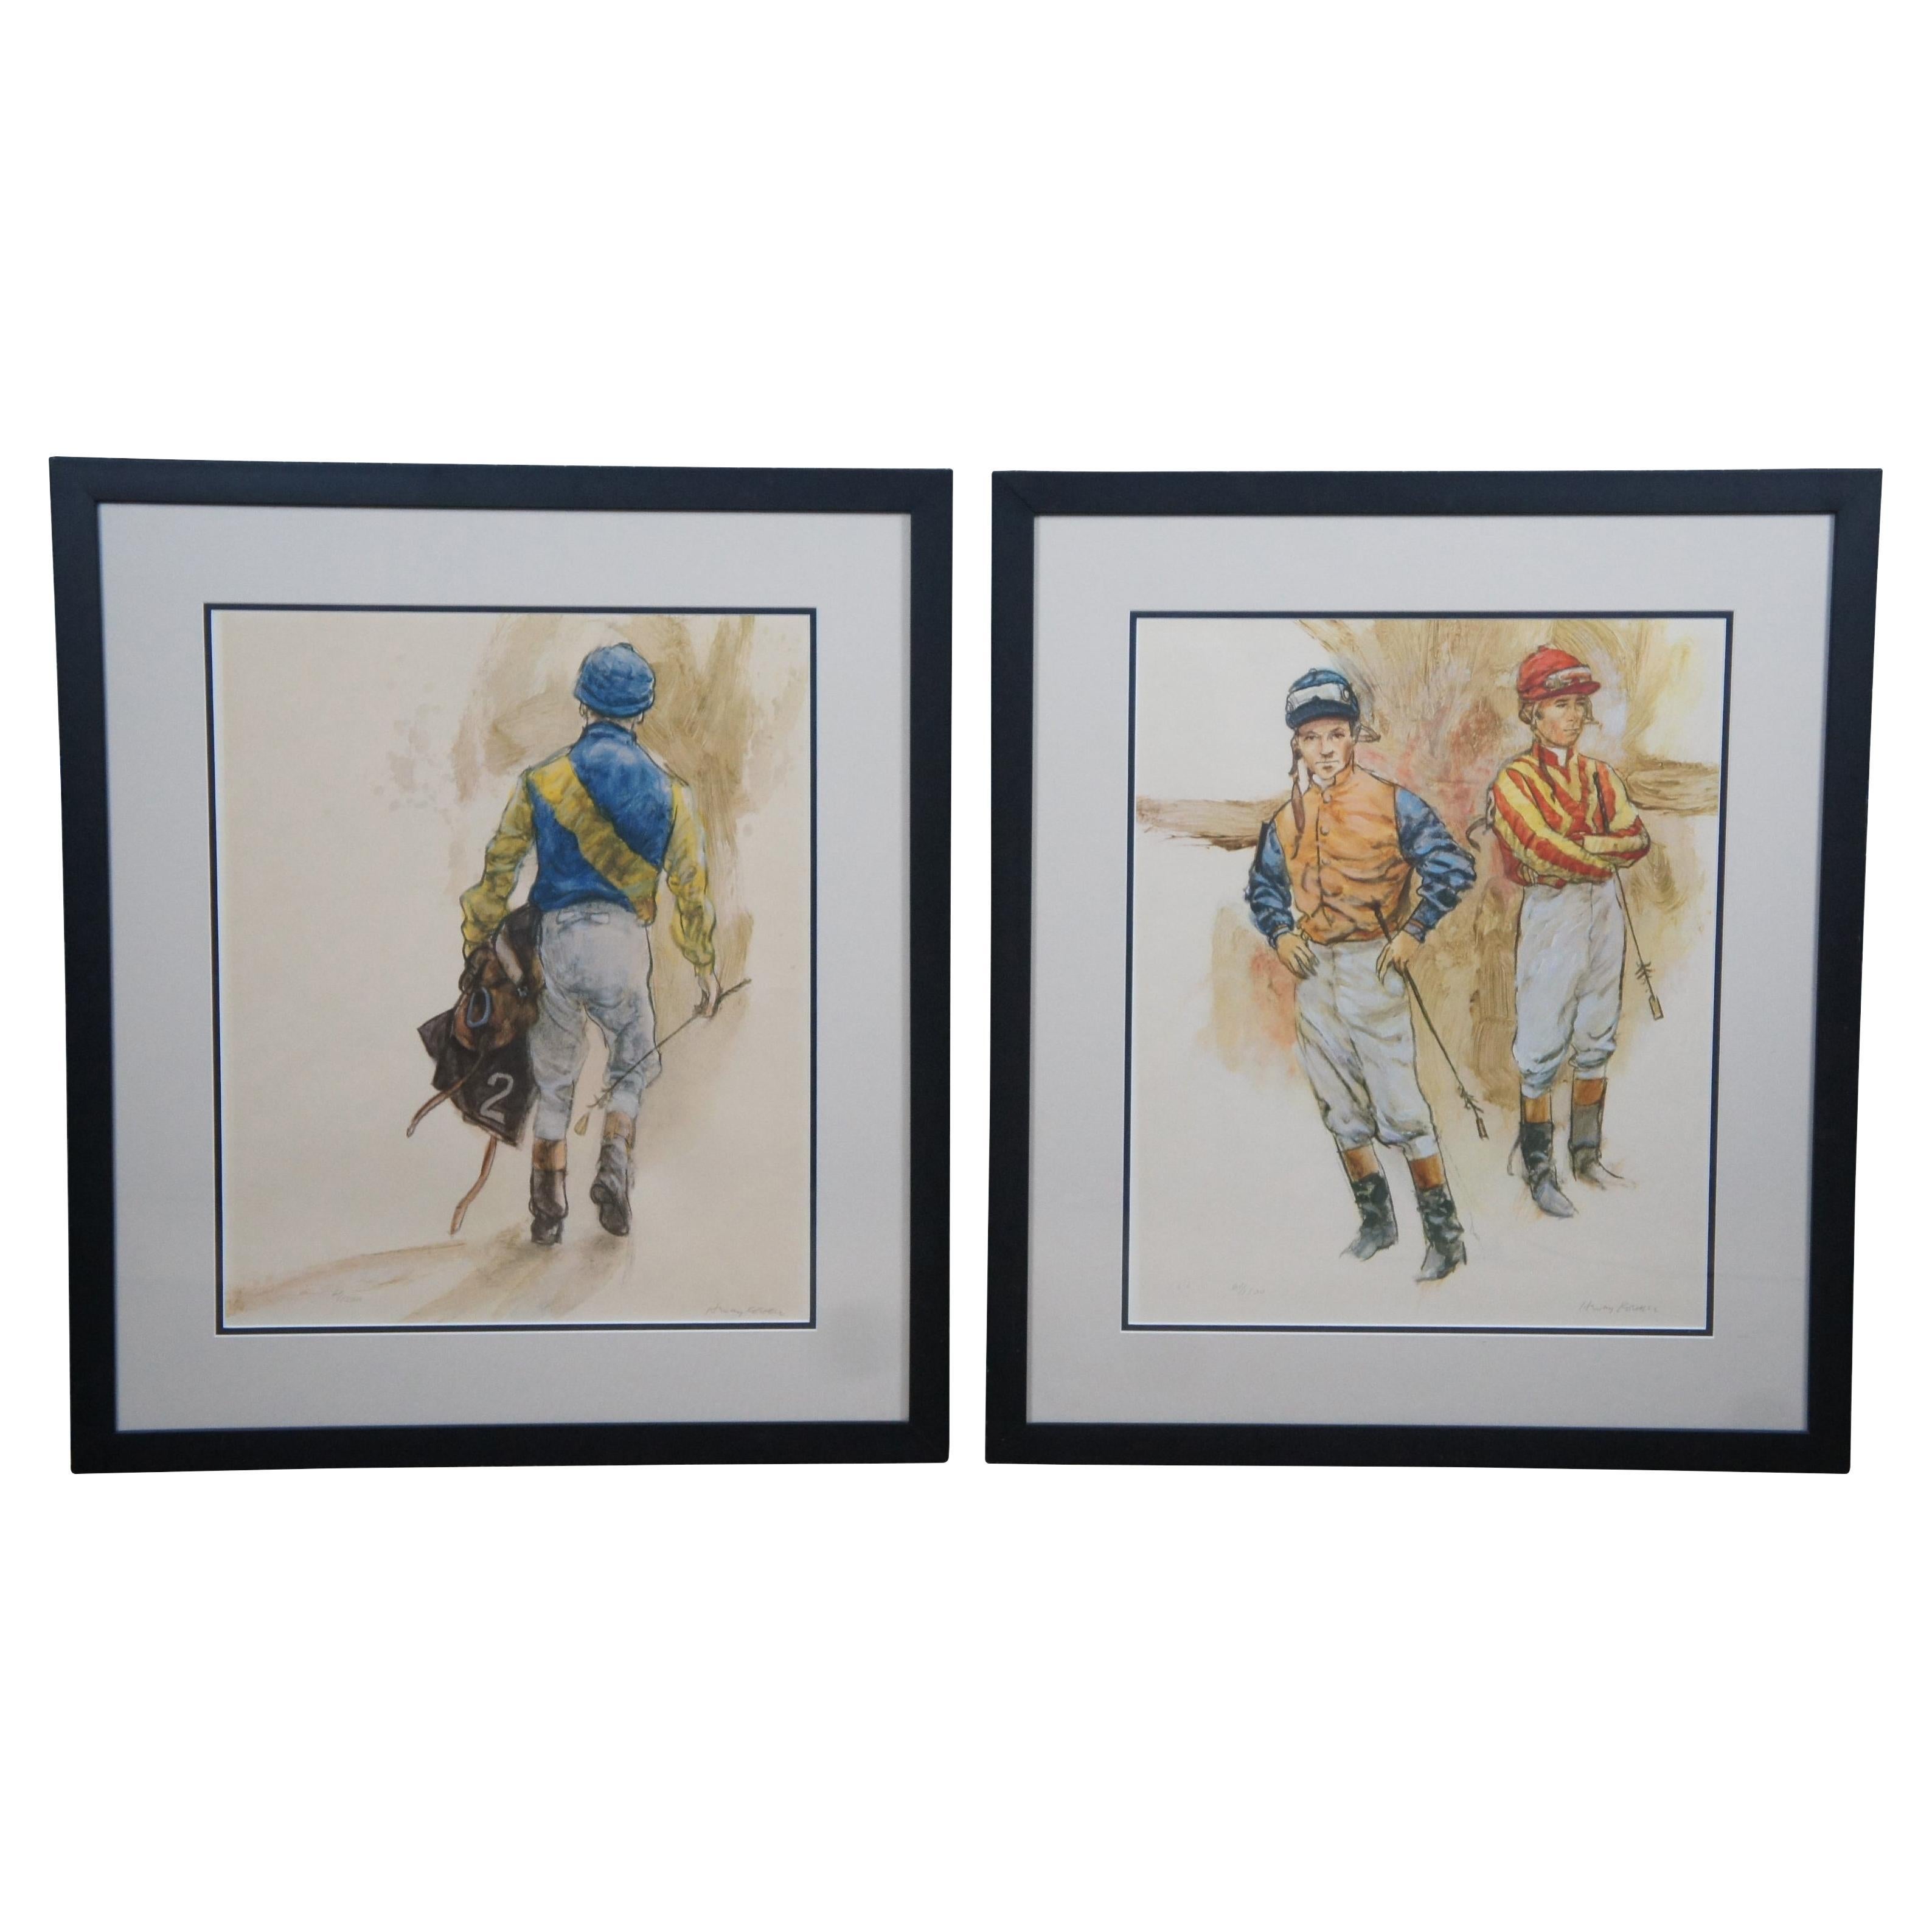 2 Vintage Henry Koehler Signed Offset Lithographs Equestrian Jockey Horse Racing